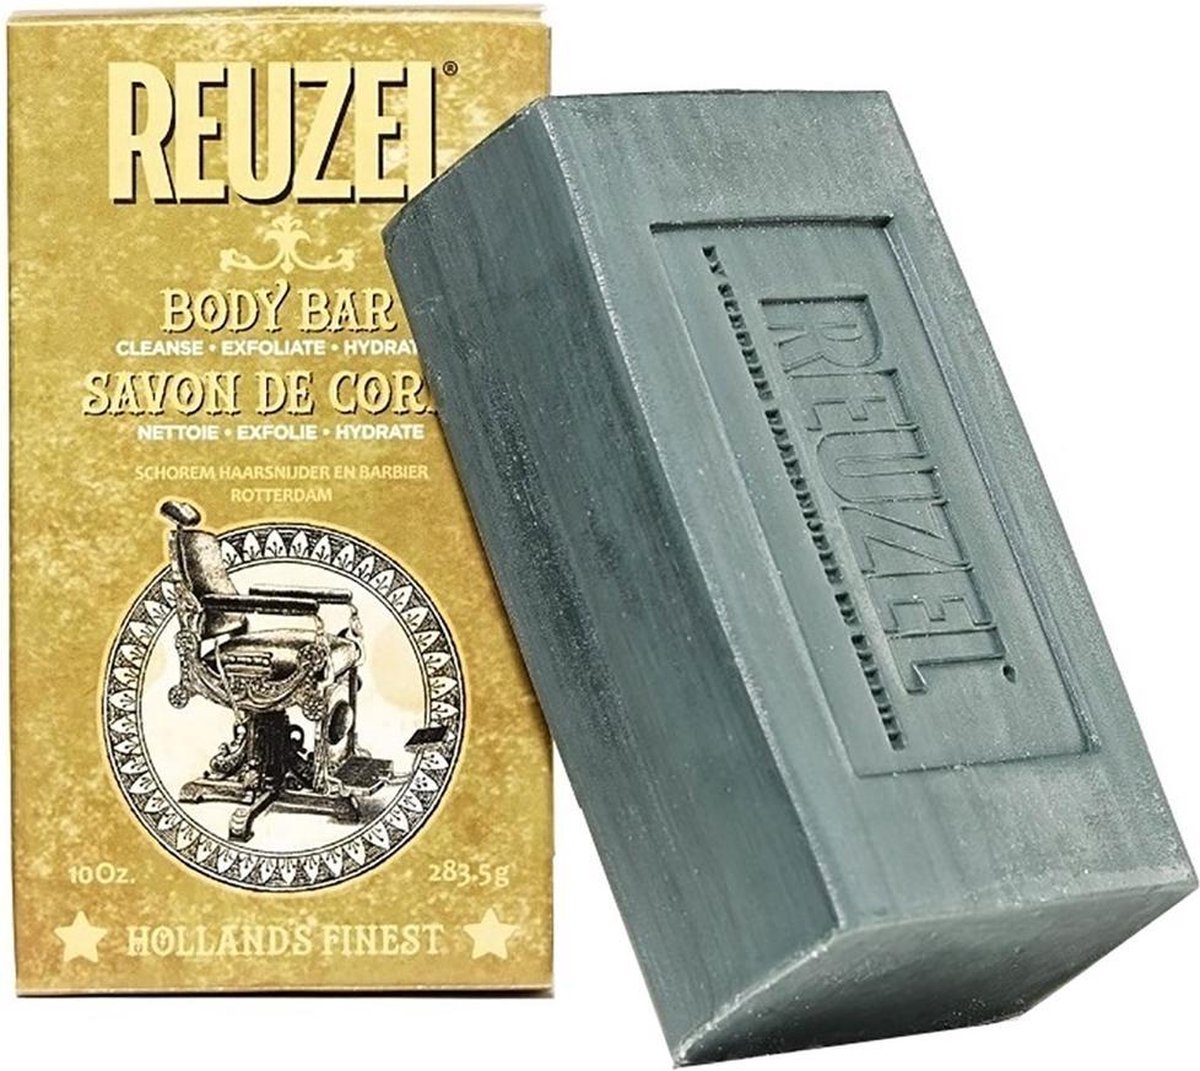 Reuzel - Hollands Finest Body Bar Soap Soap In Cube 283.5G